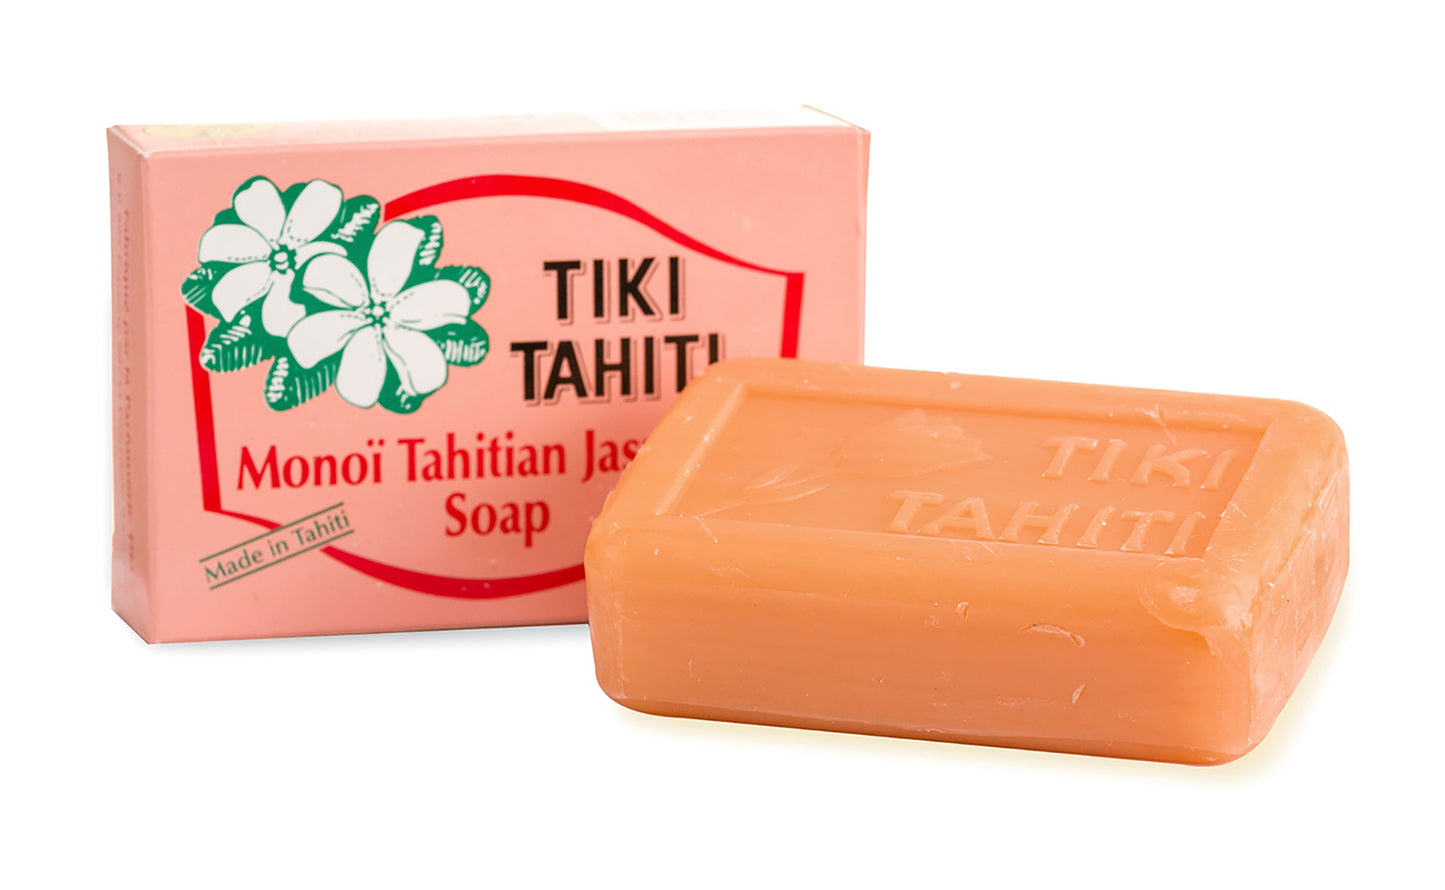 Tiki Pitate Jasmine Soap Σαπούνι με περιεκτικότητα 30% σε Monoi oil, με άρωμα Pitate,130gr